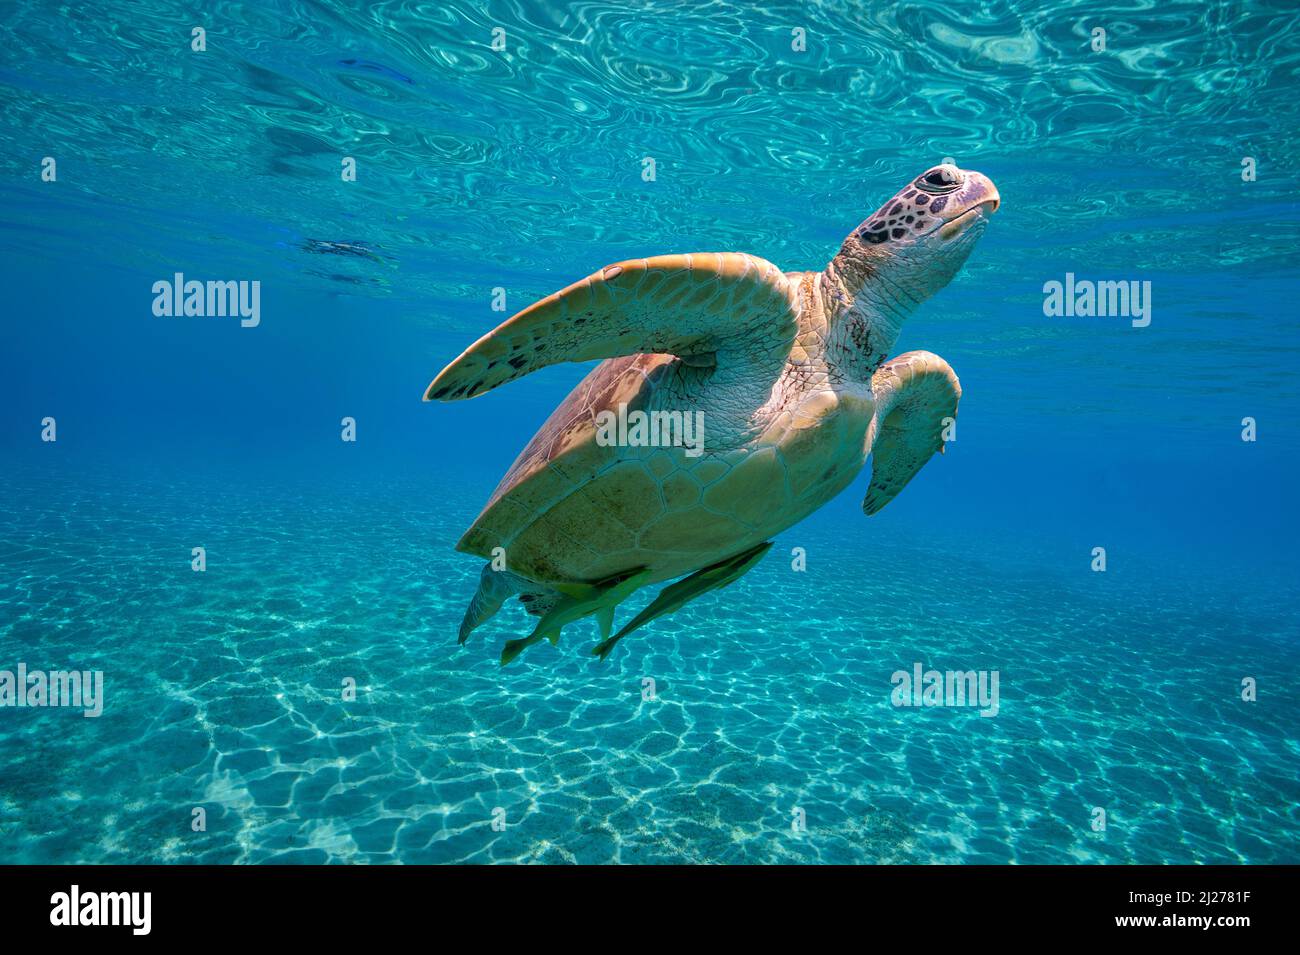 Green Sea Turtle (Chelonia mydas) with remoras (Echeneis naucrates), swimming in blue water, Marsa Alam, Egypt Stock Photo